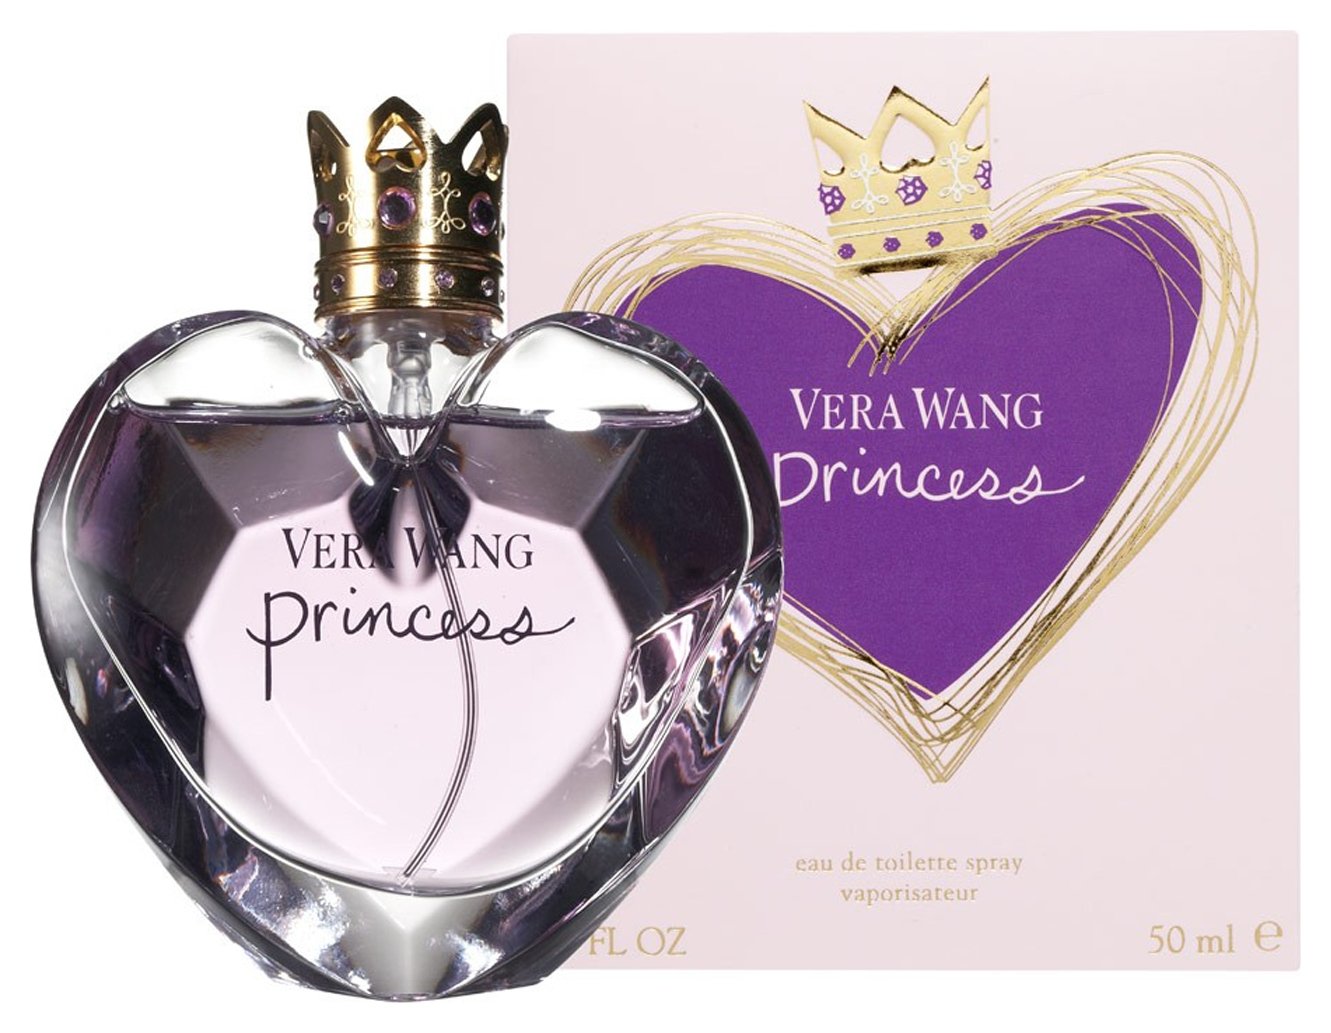 Vera Wang Princess for Women Eau de Toilette - 50ml